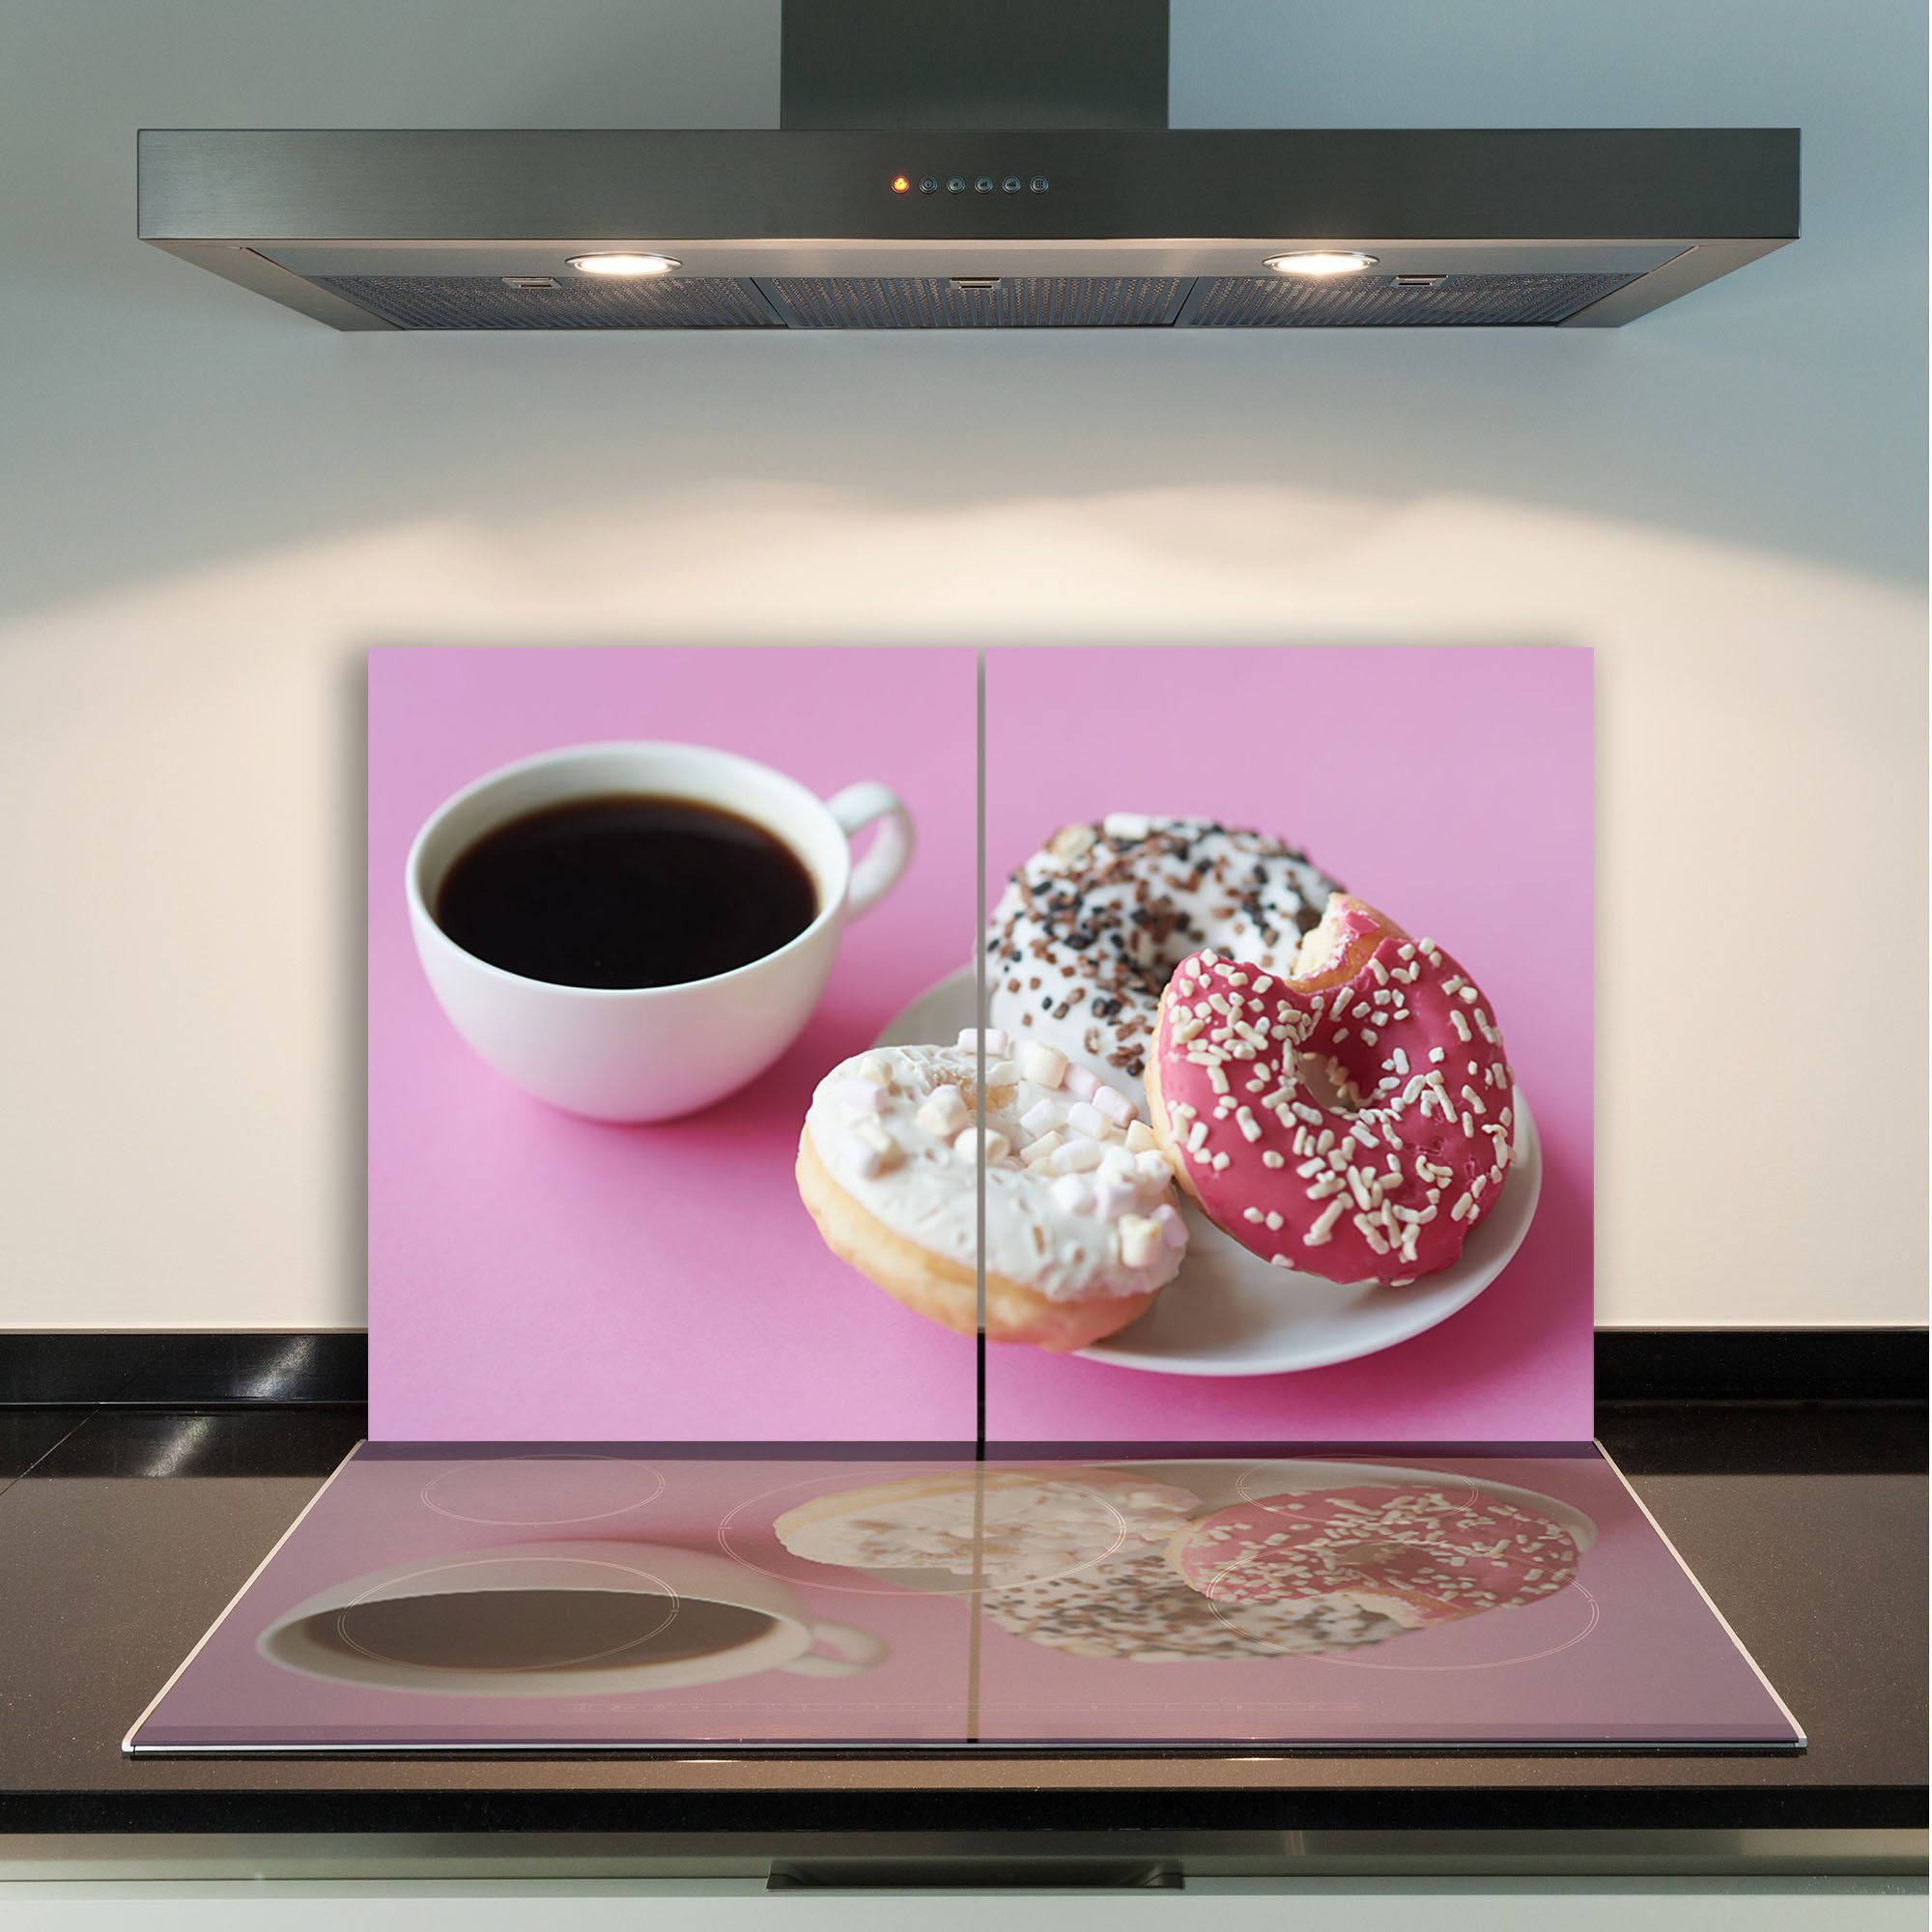 Decorwelt Herd-Abdeckplatte Ceranfeldabdeckung Glas Kaffee 2-teilig Pink 80x52